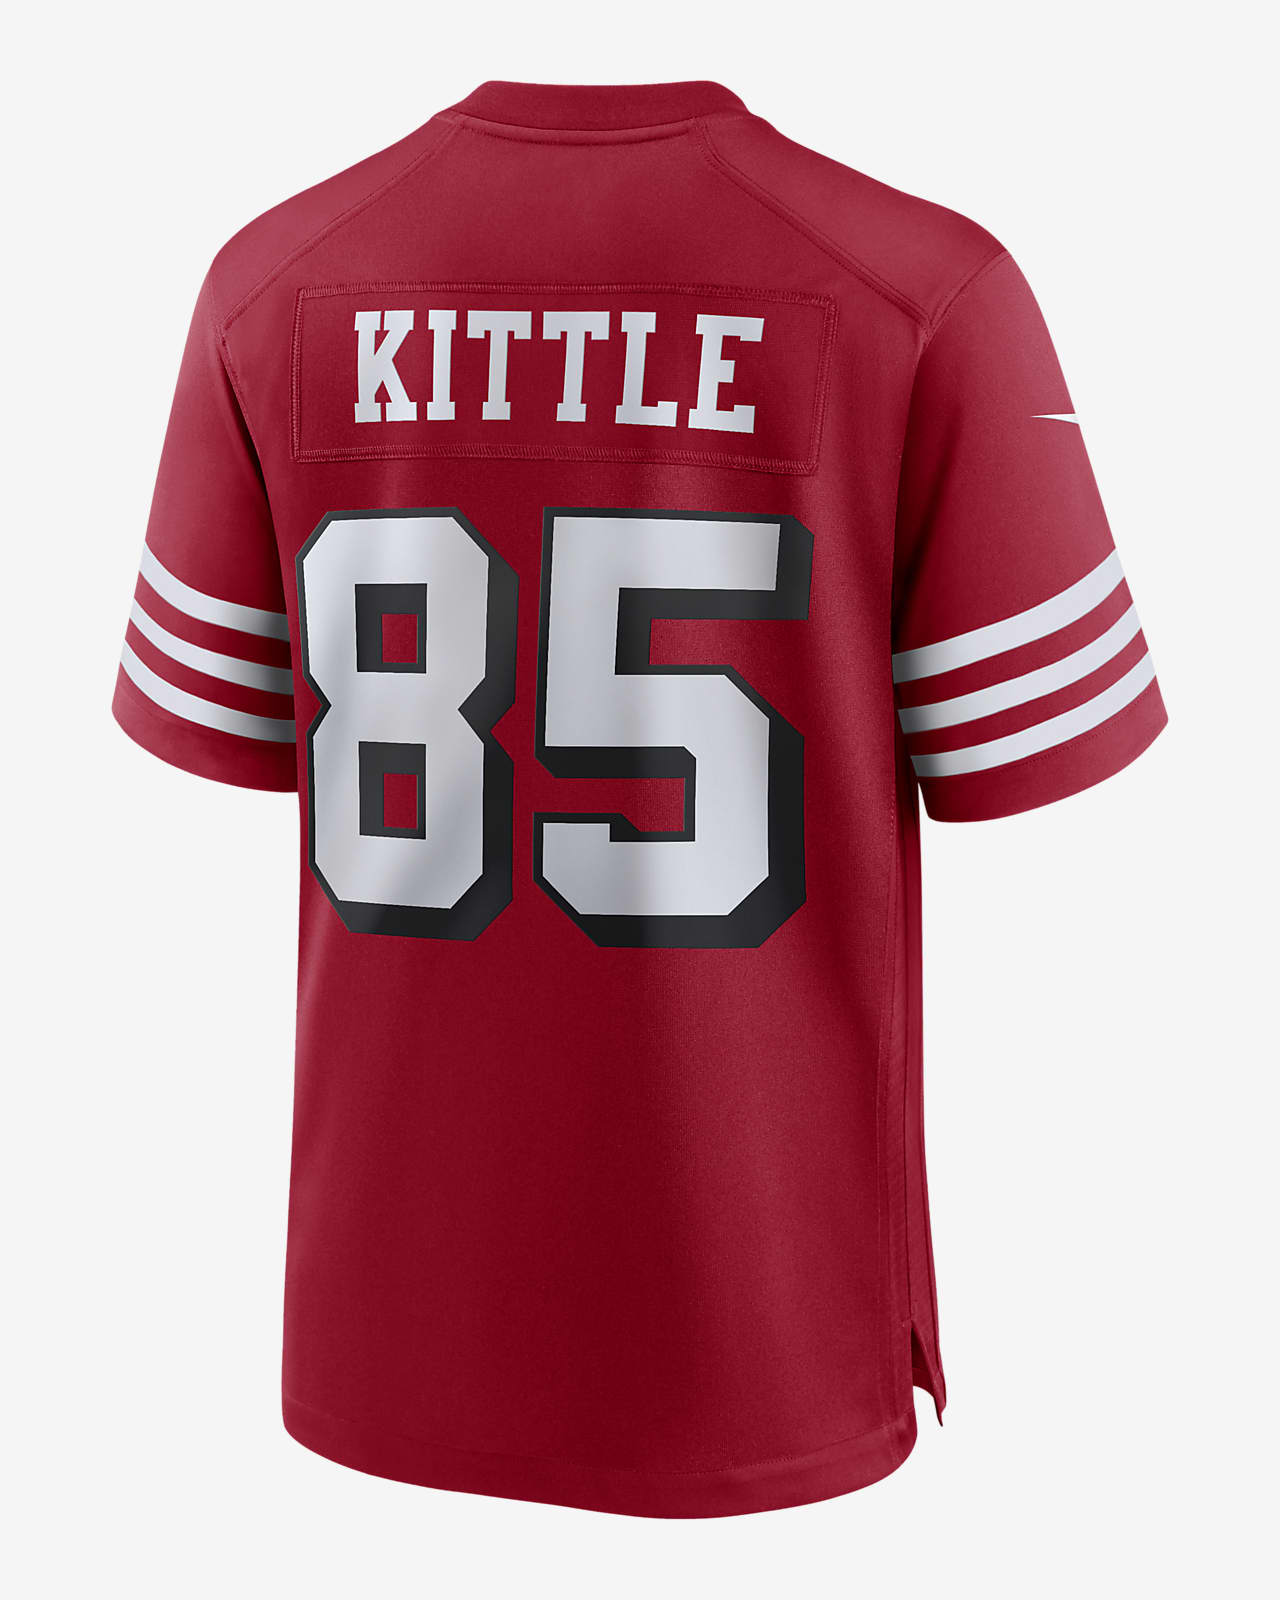 49ers kittle shirt